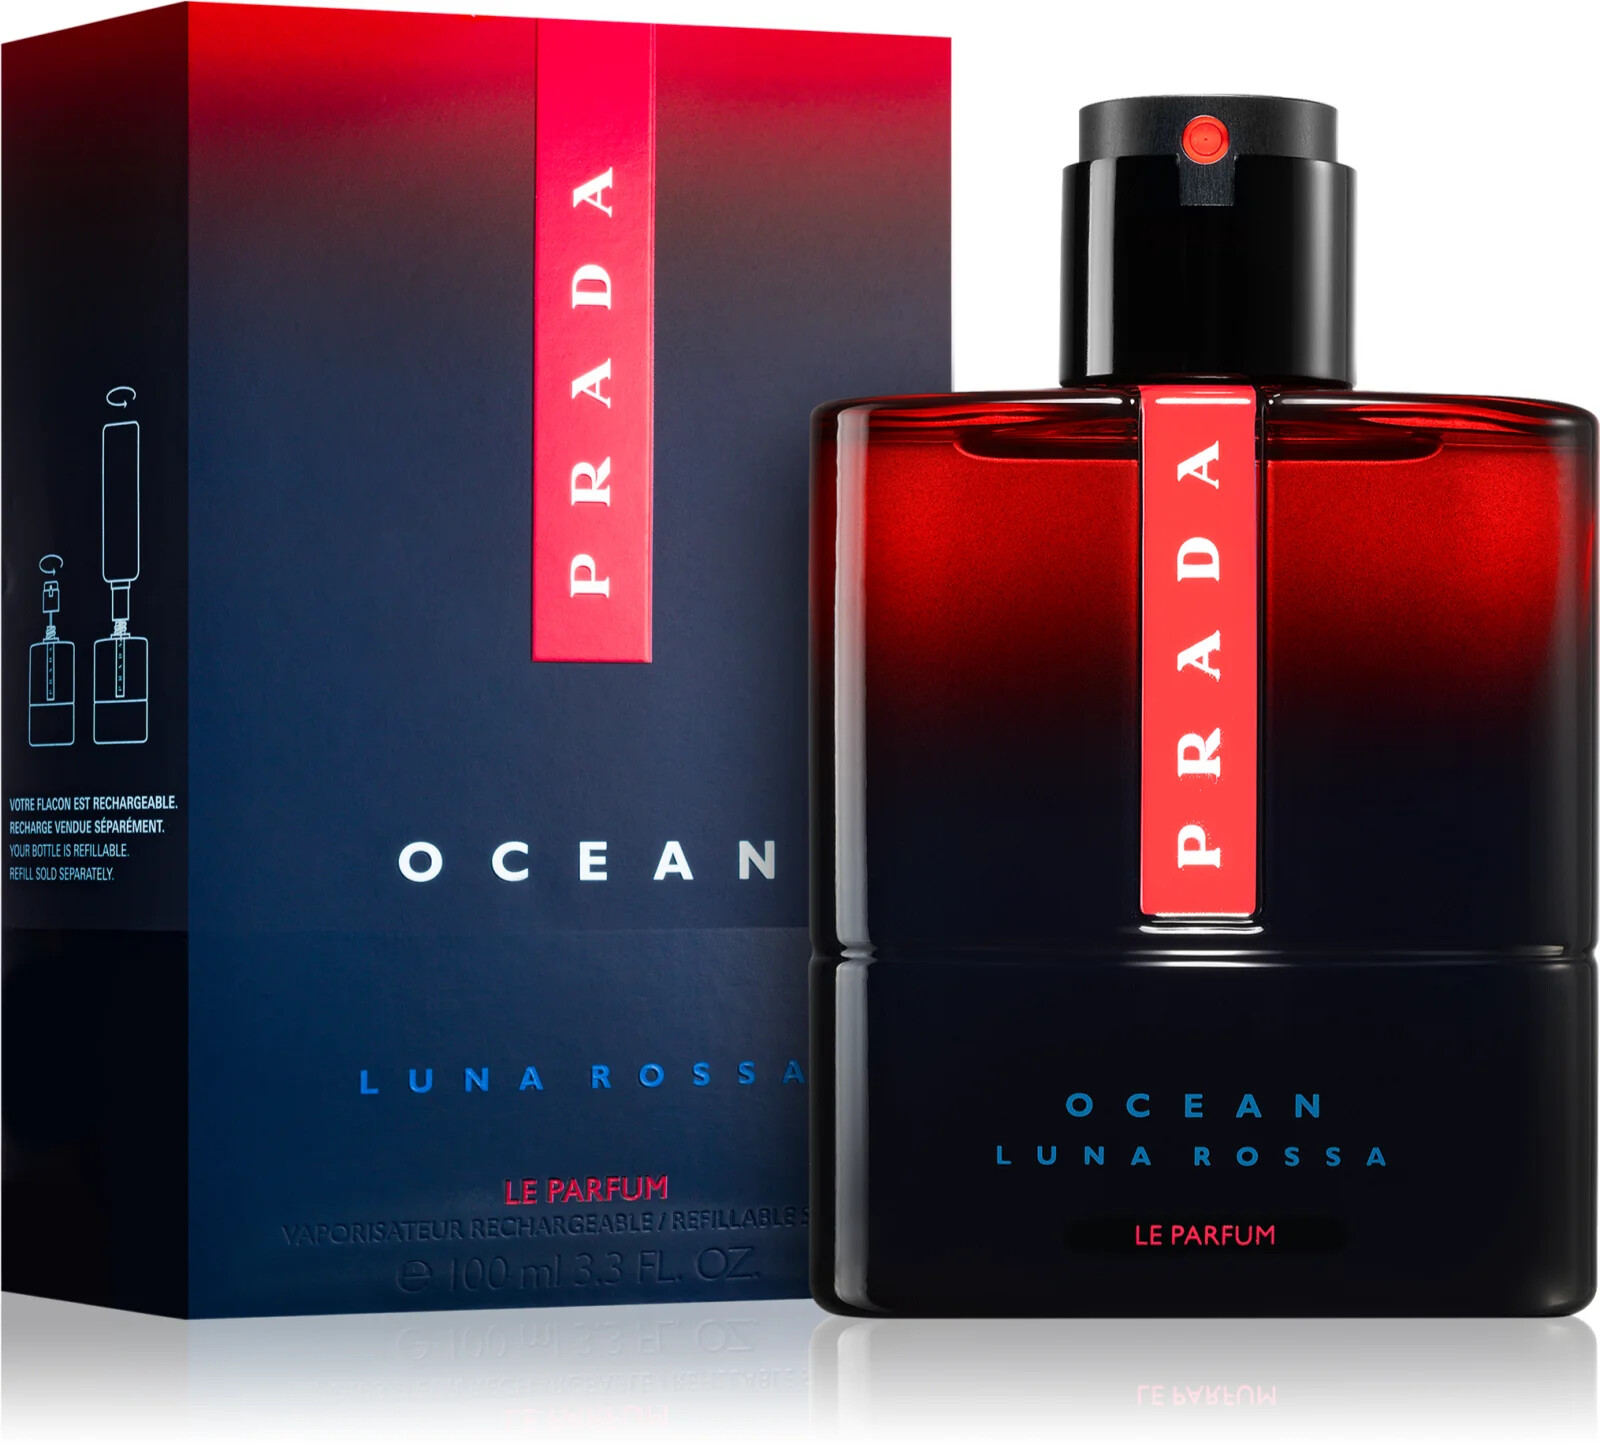 Prada Luna Rossa Ocean Le Parfum parfém pro muže 100 ml